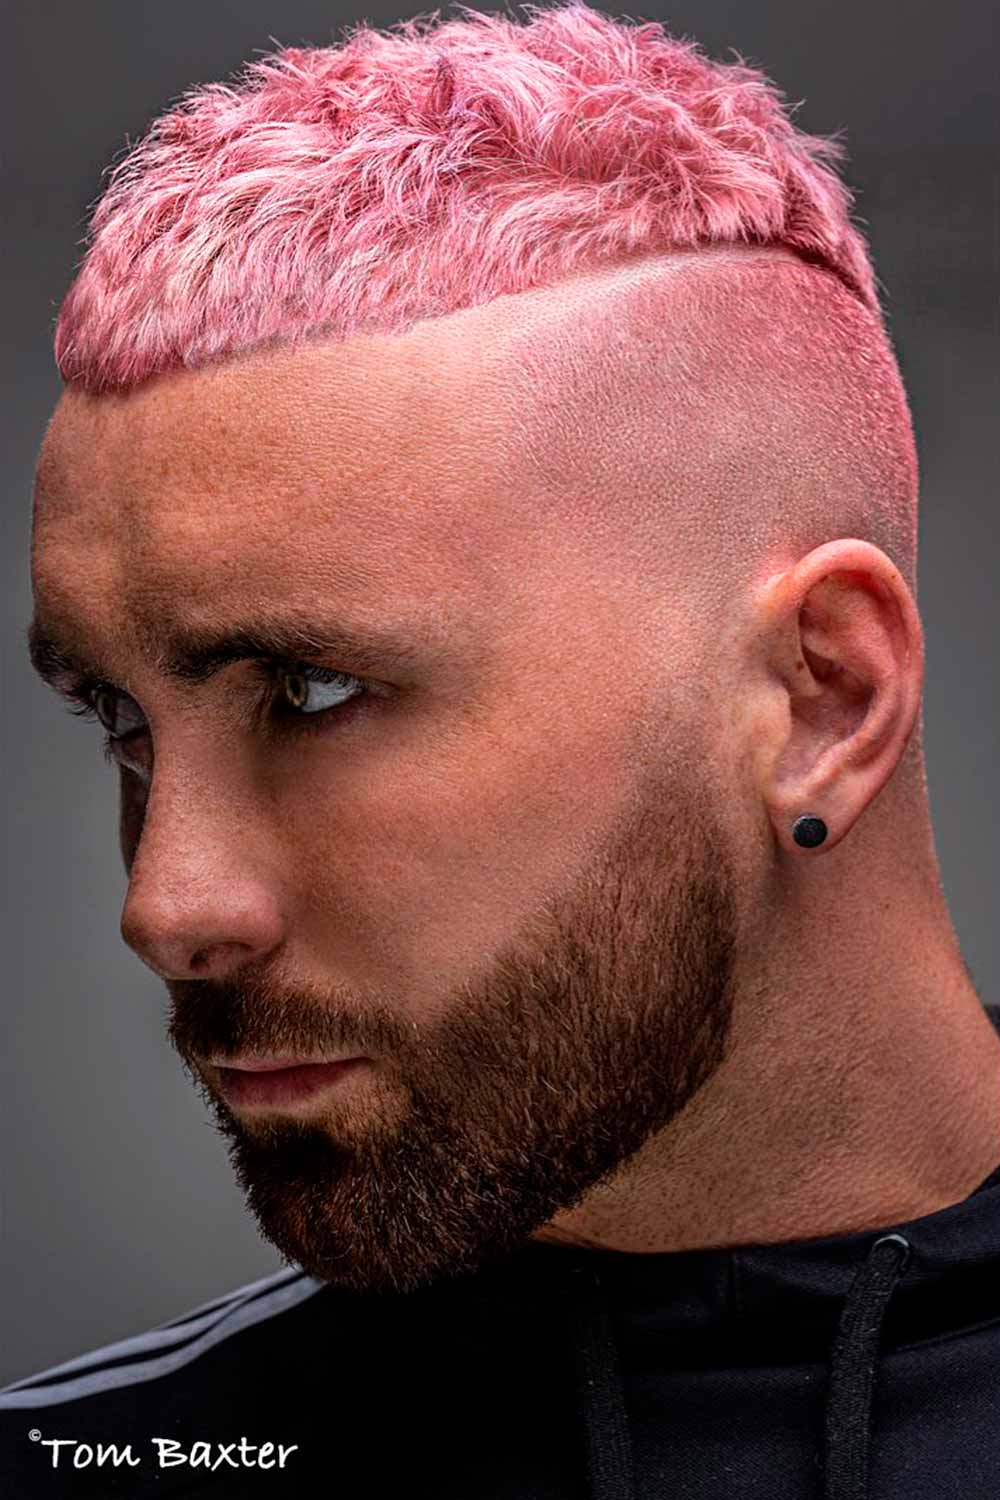 Pink Crew Cut #typesofhaircuts #typesofhaircutsformen #typesofmenshaircuts #haircutnames